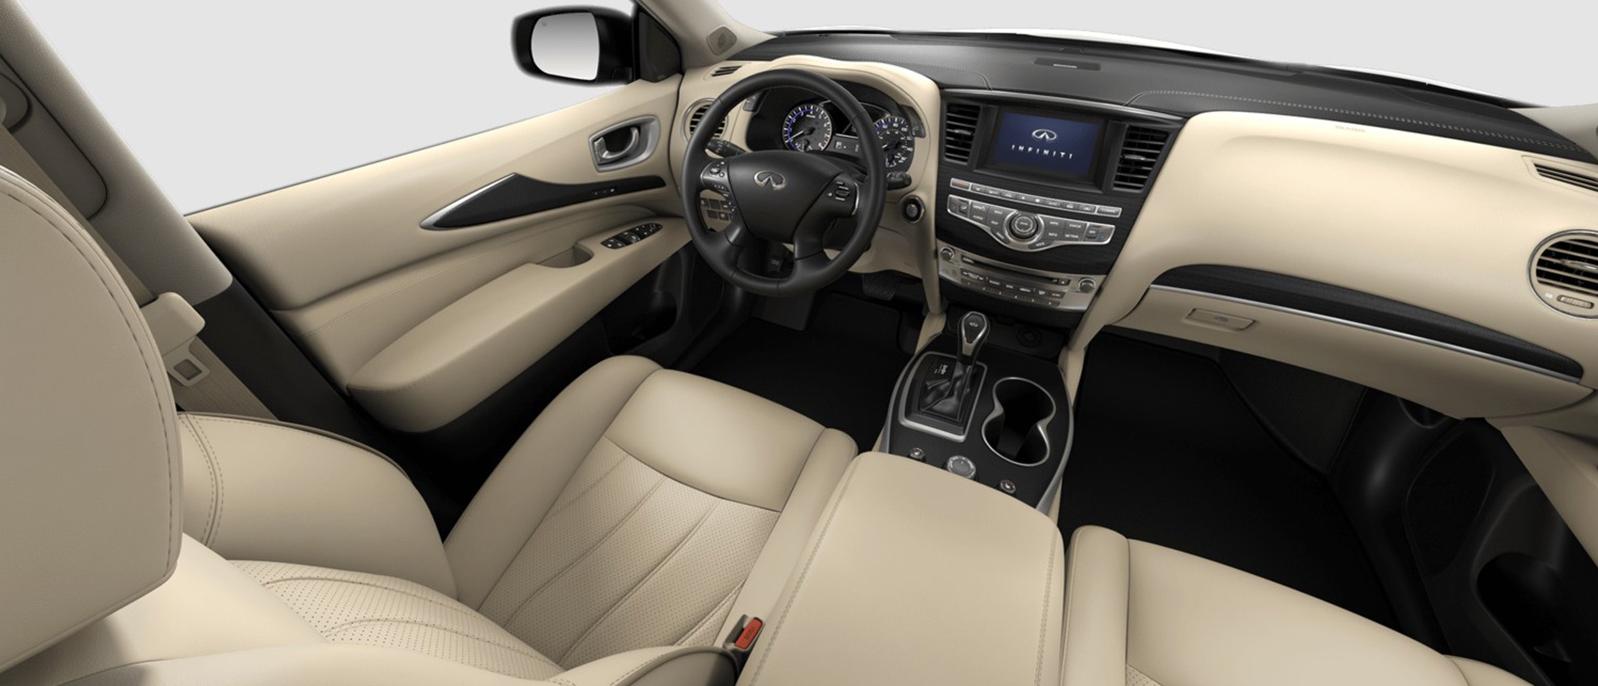 INFINITI QX60 Luxe trim interior in Wheat color scheme.